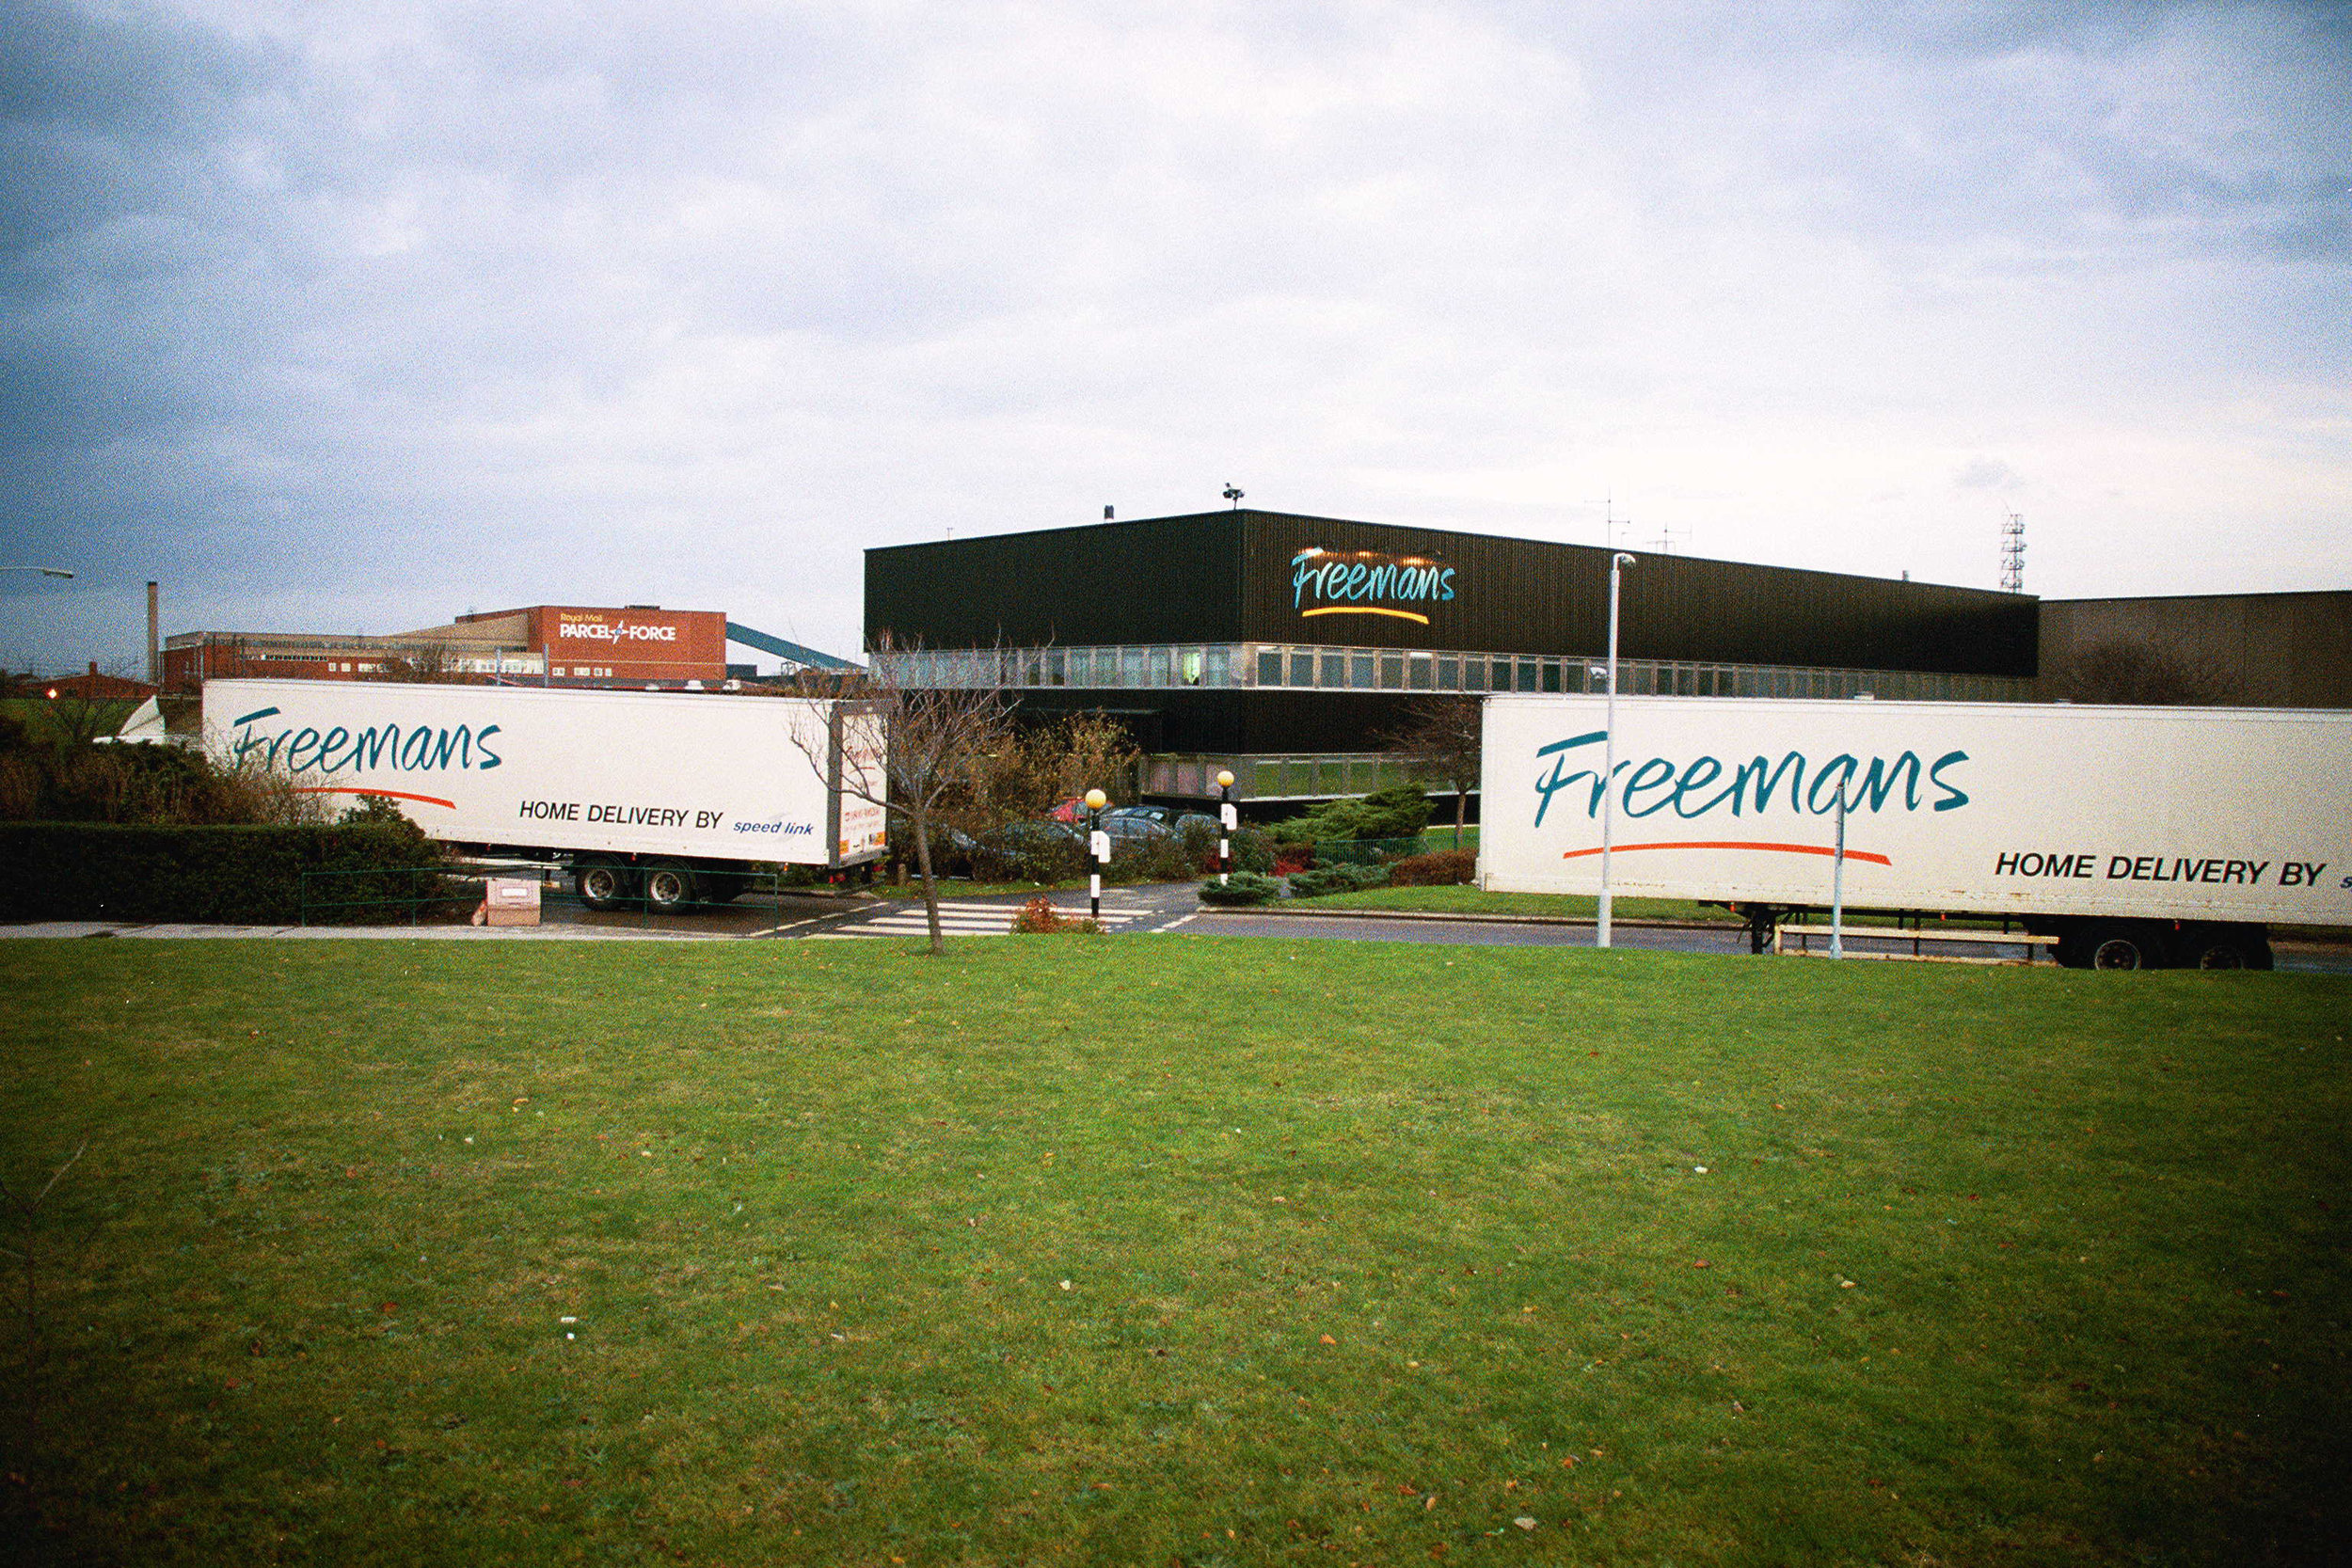 Freemans-2001-A copy.jpg